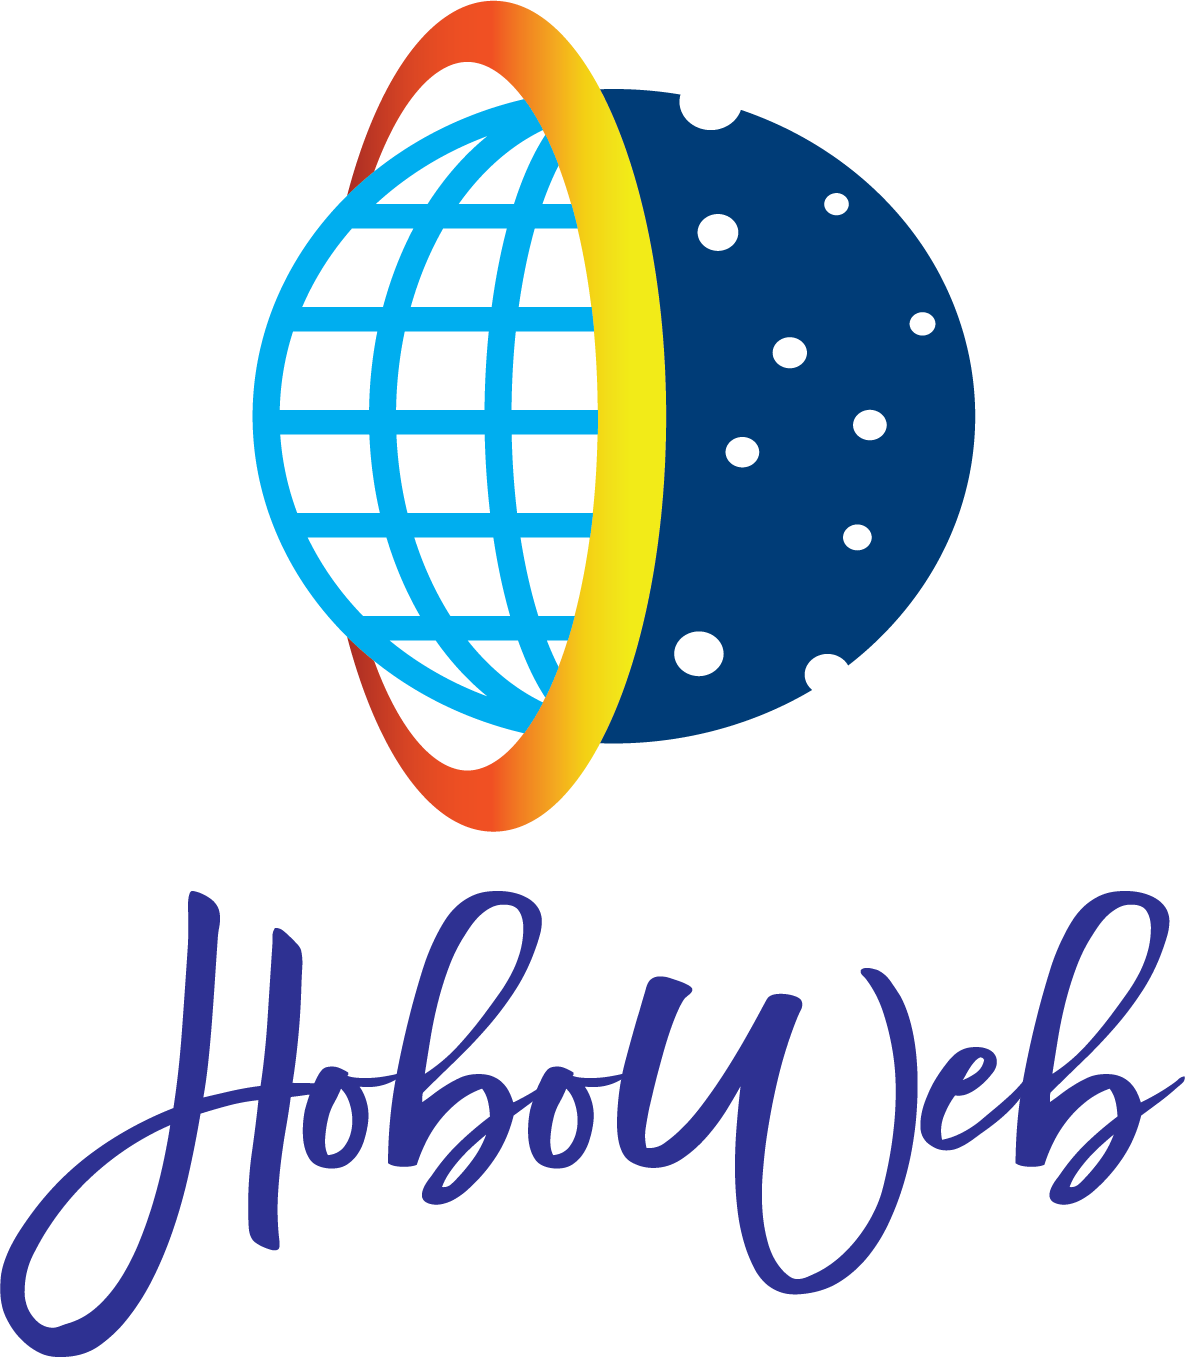 Hoboweb Agence de communication